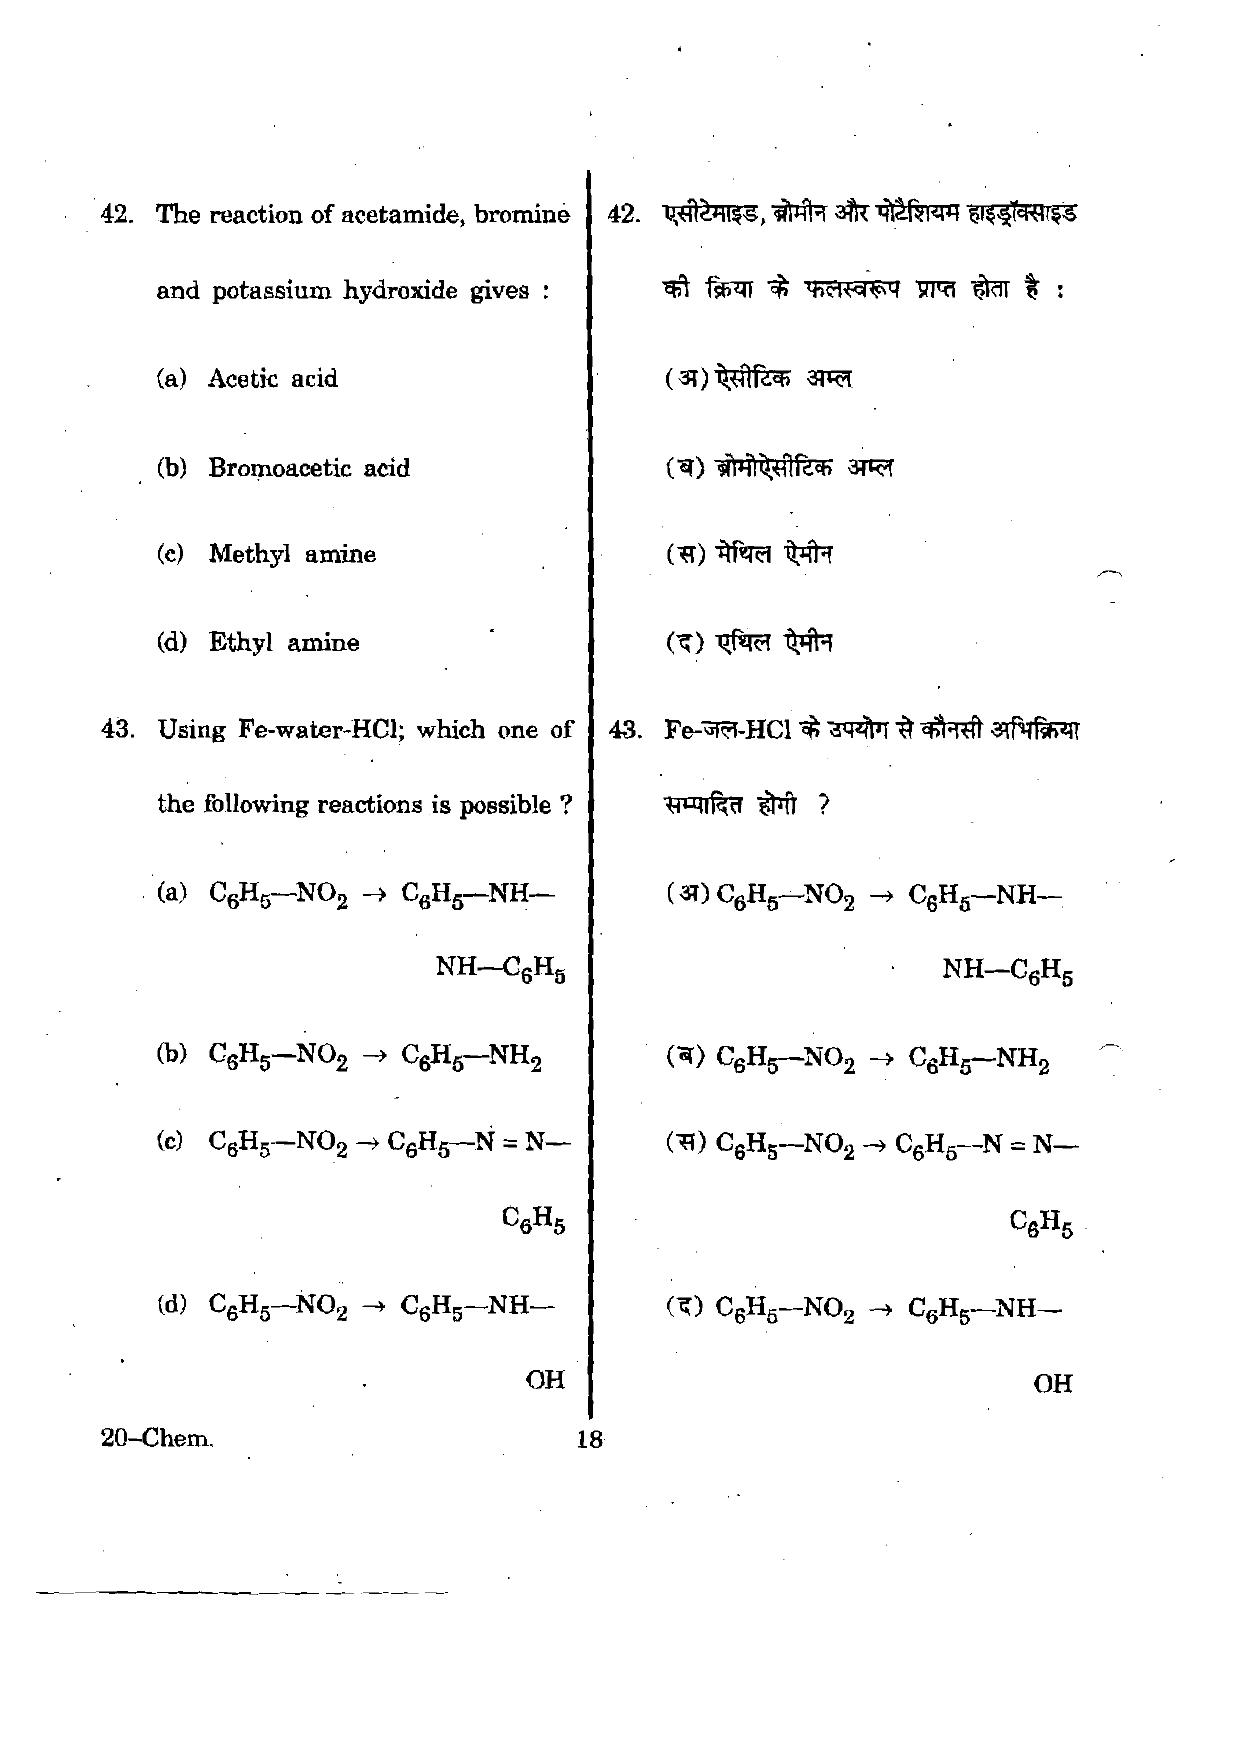 URATPG Chemistry 2012 Question Paper - Page 18